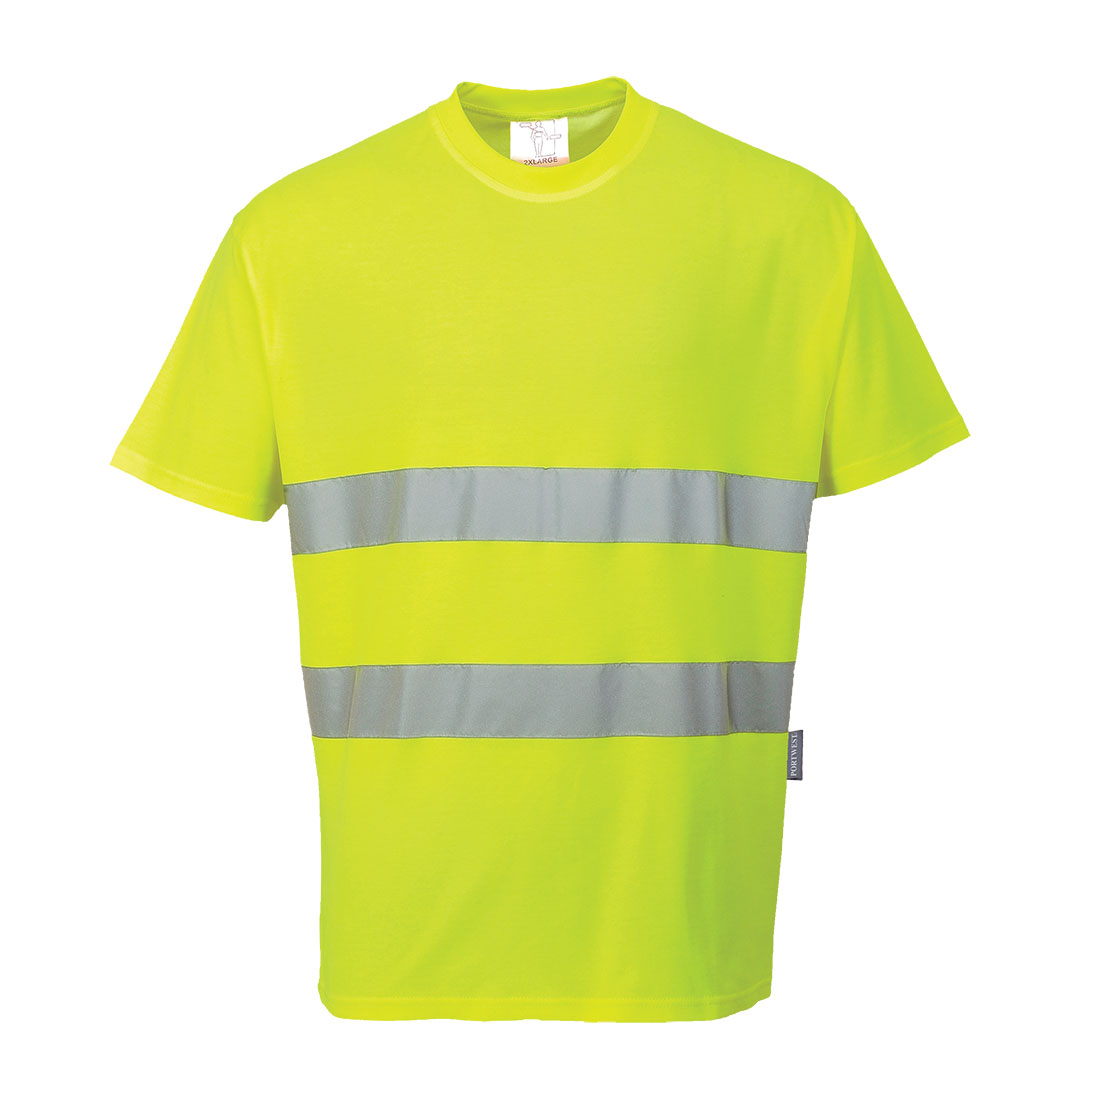 Cotton Comfort T-Shirt S172 Velikost: M, Barva: yellow